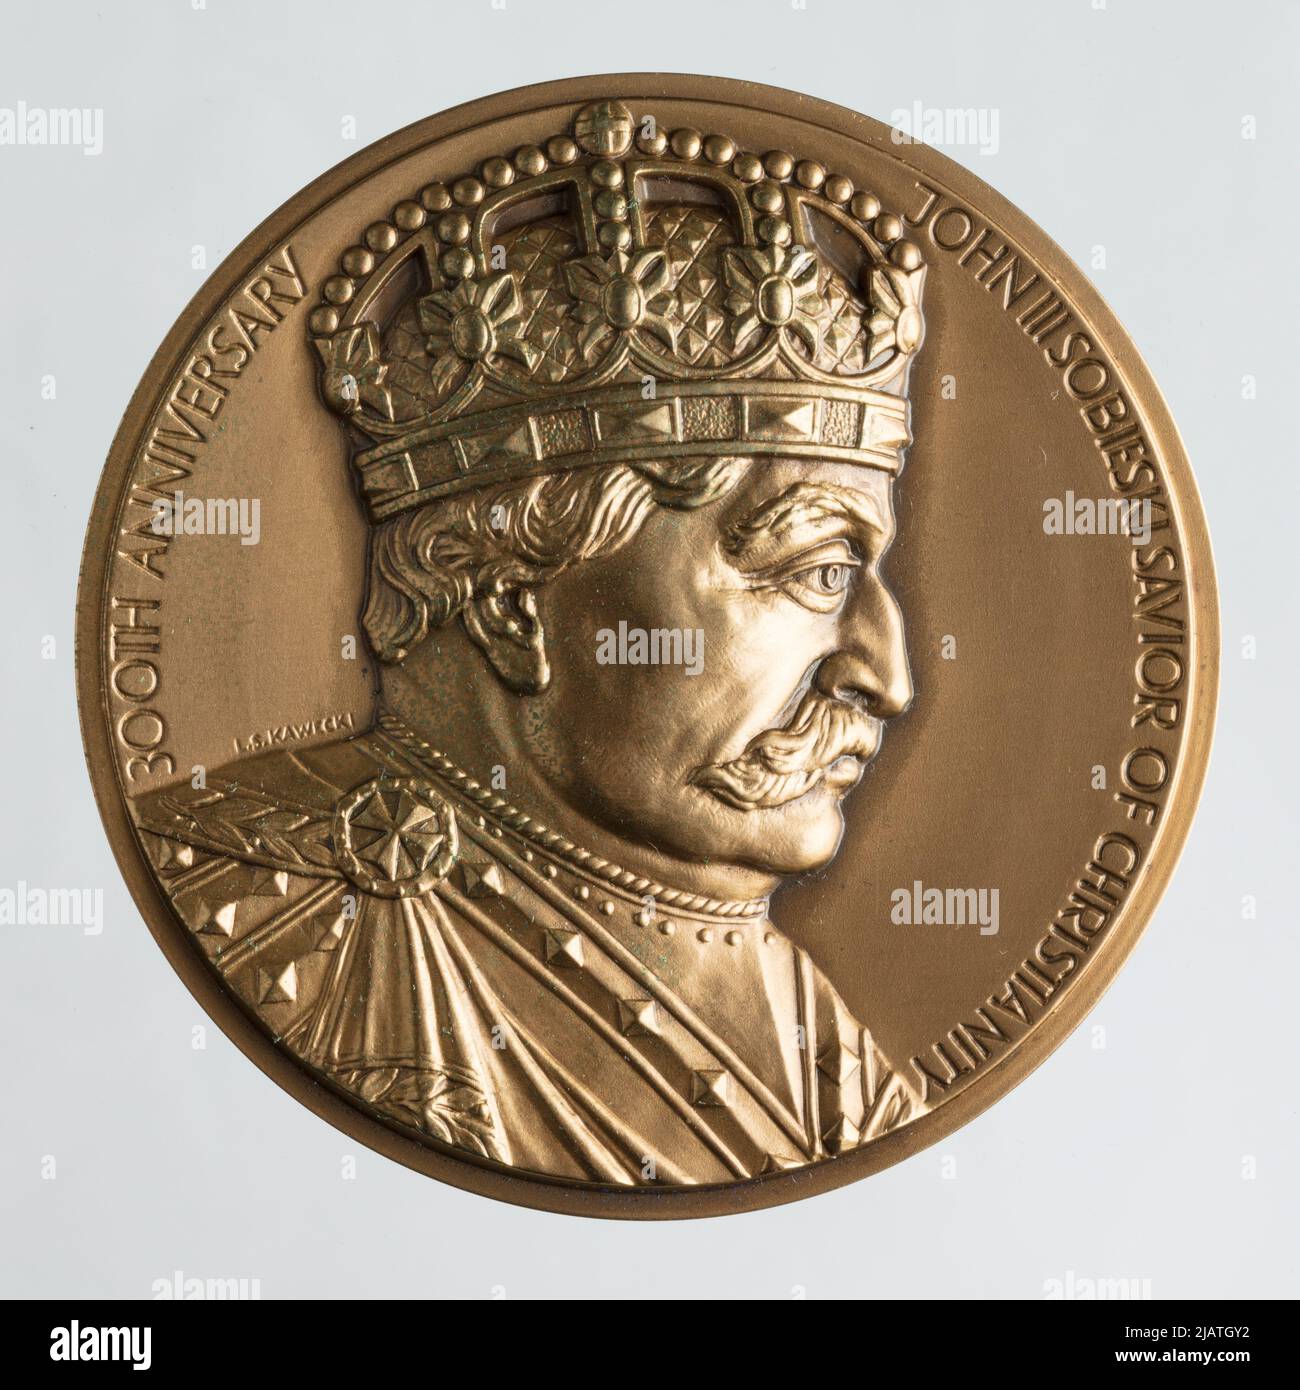 Medaille: 300. Jahre Schlacht bei Wien Medallic Art Company, Danbury, Connecticut, Kawecki, Leon S. Stockfoto